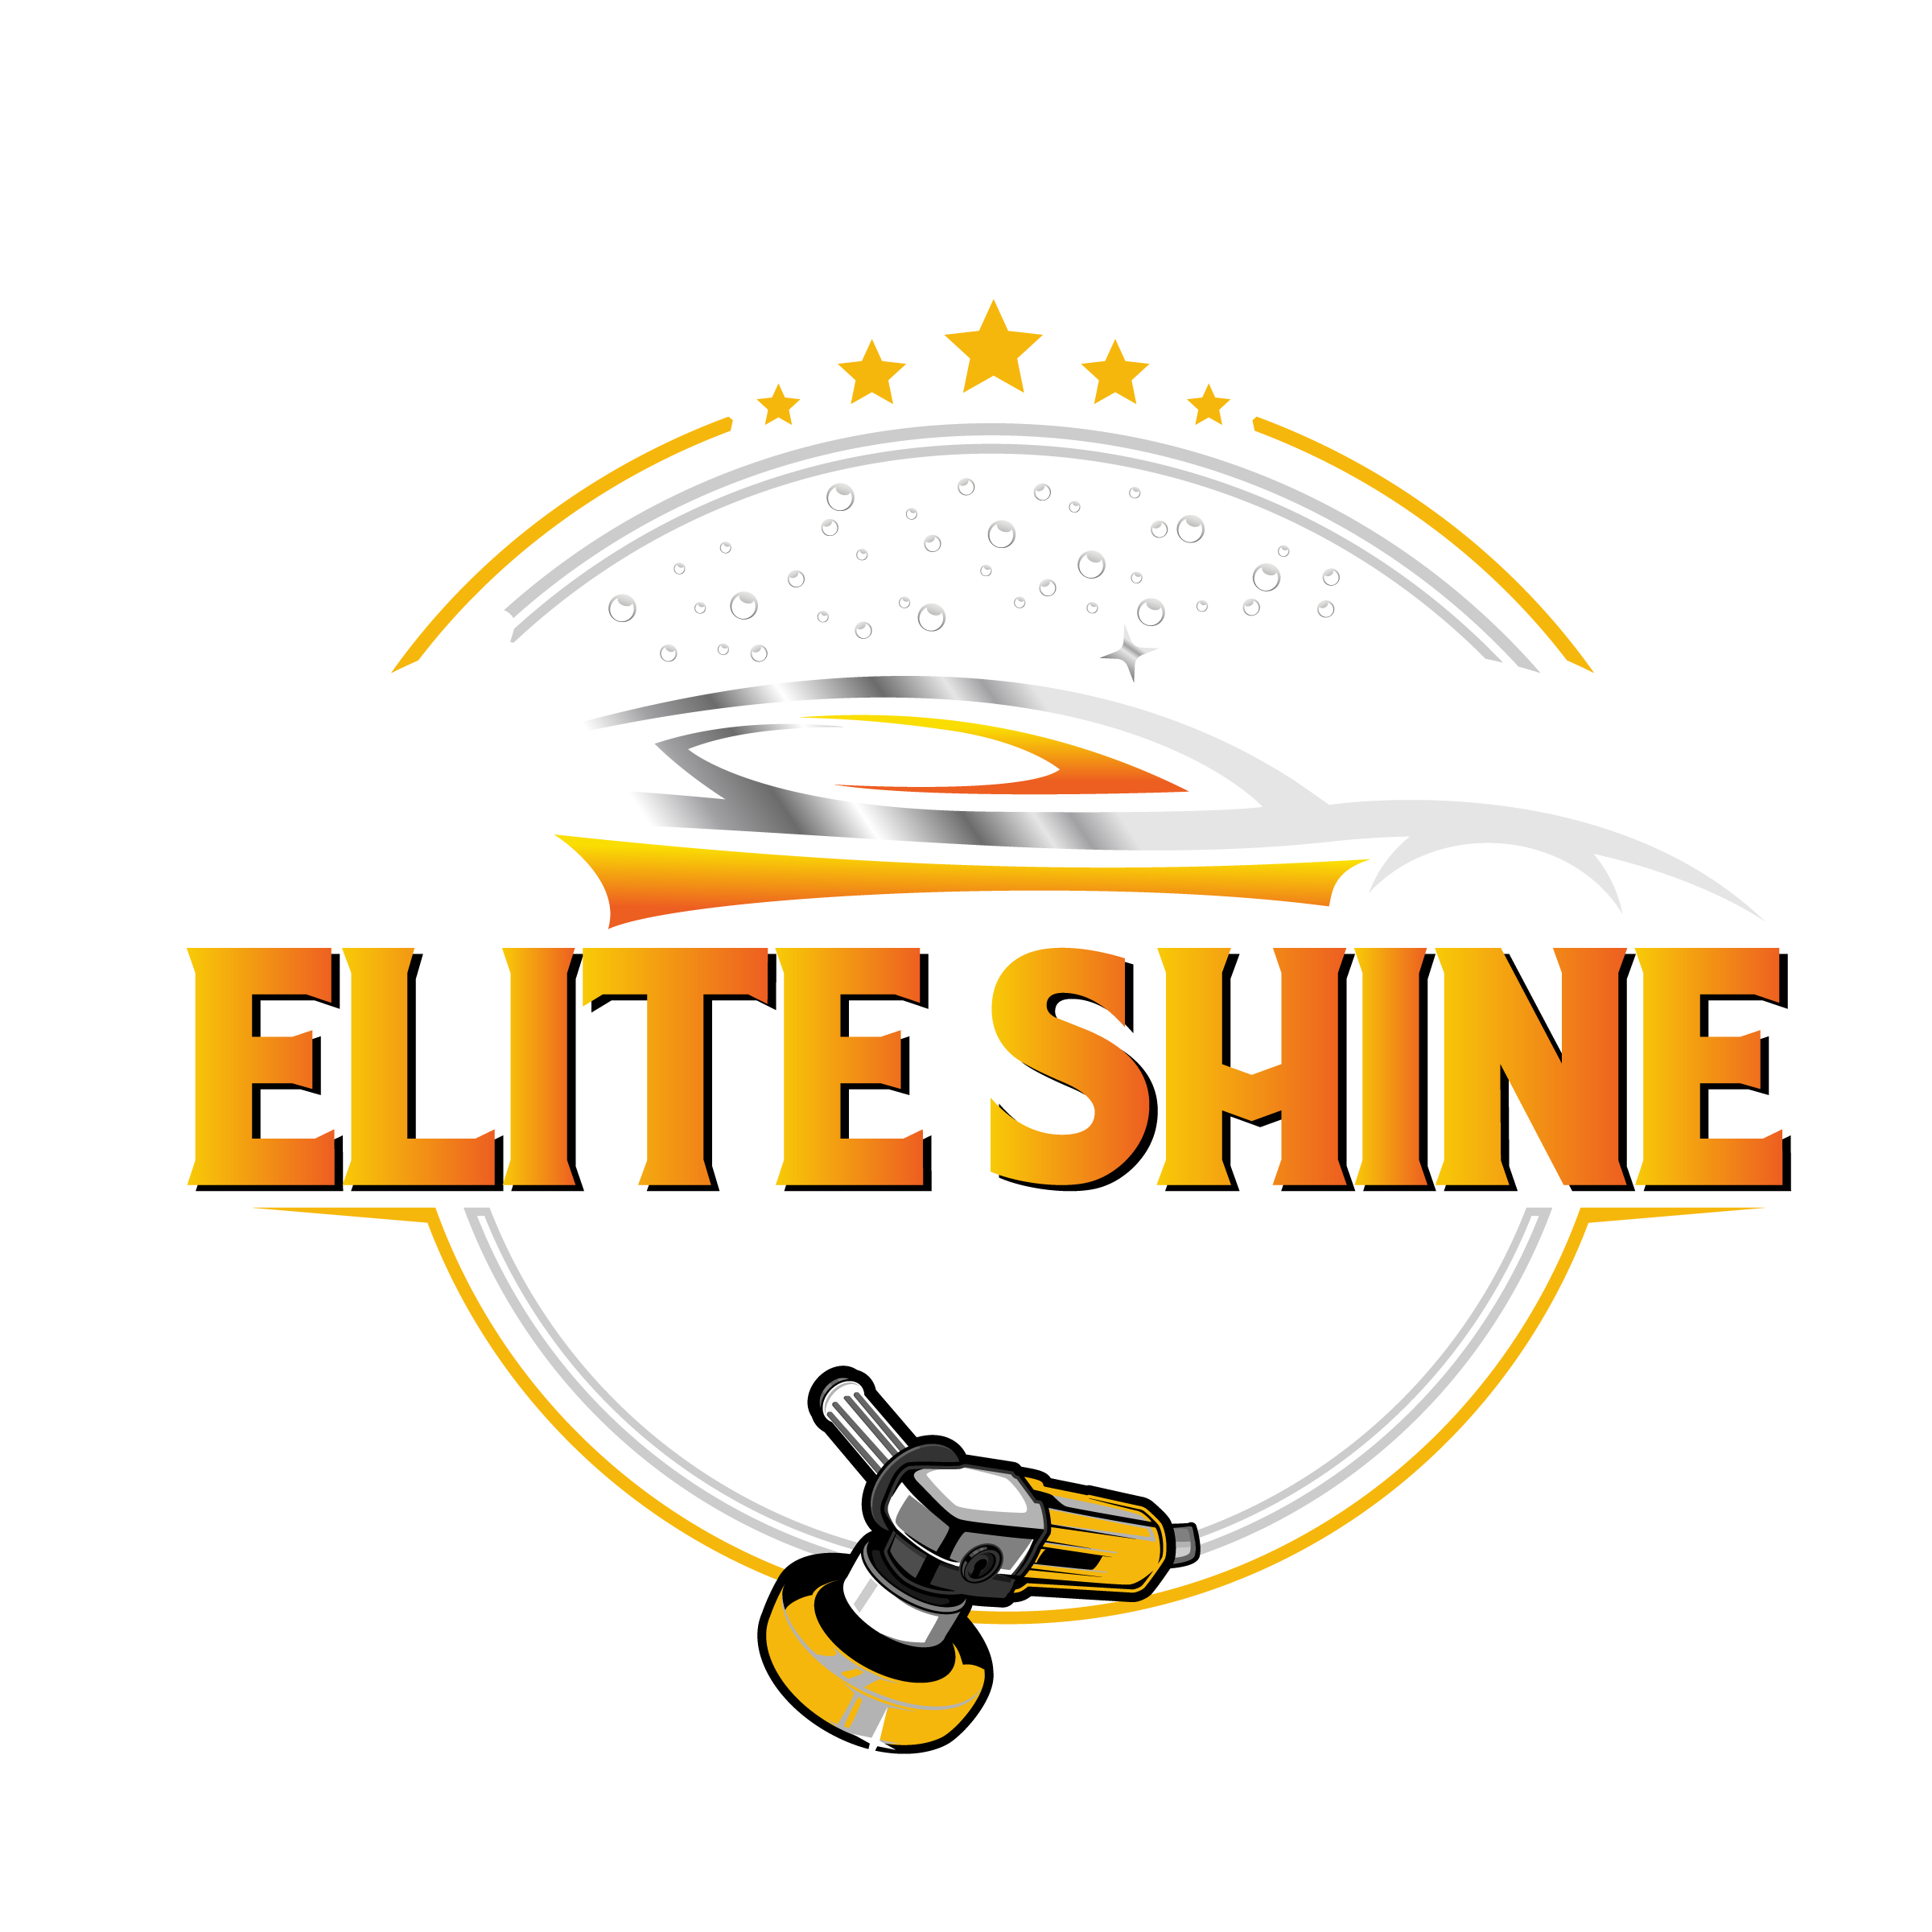 Elite Shine Detailing